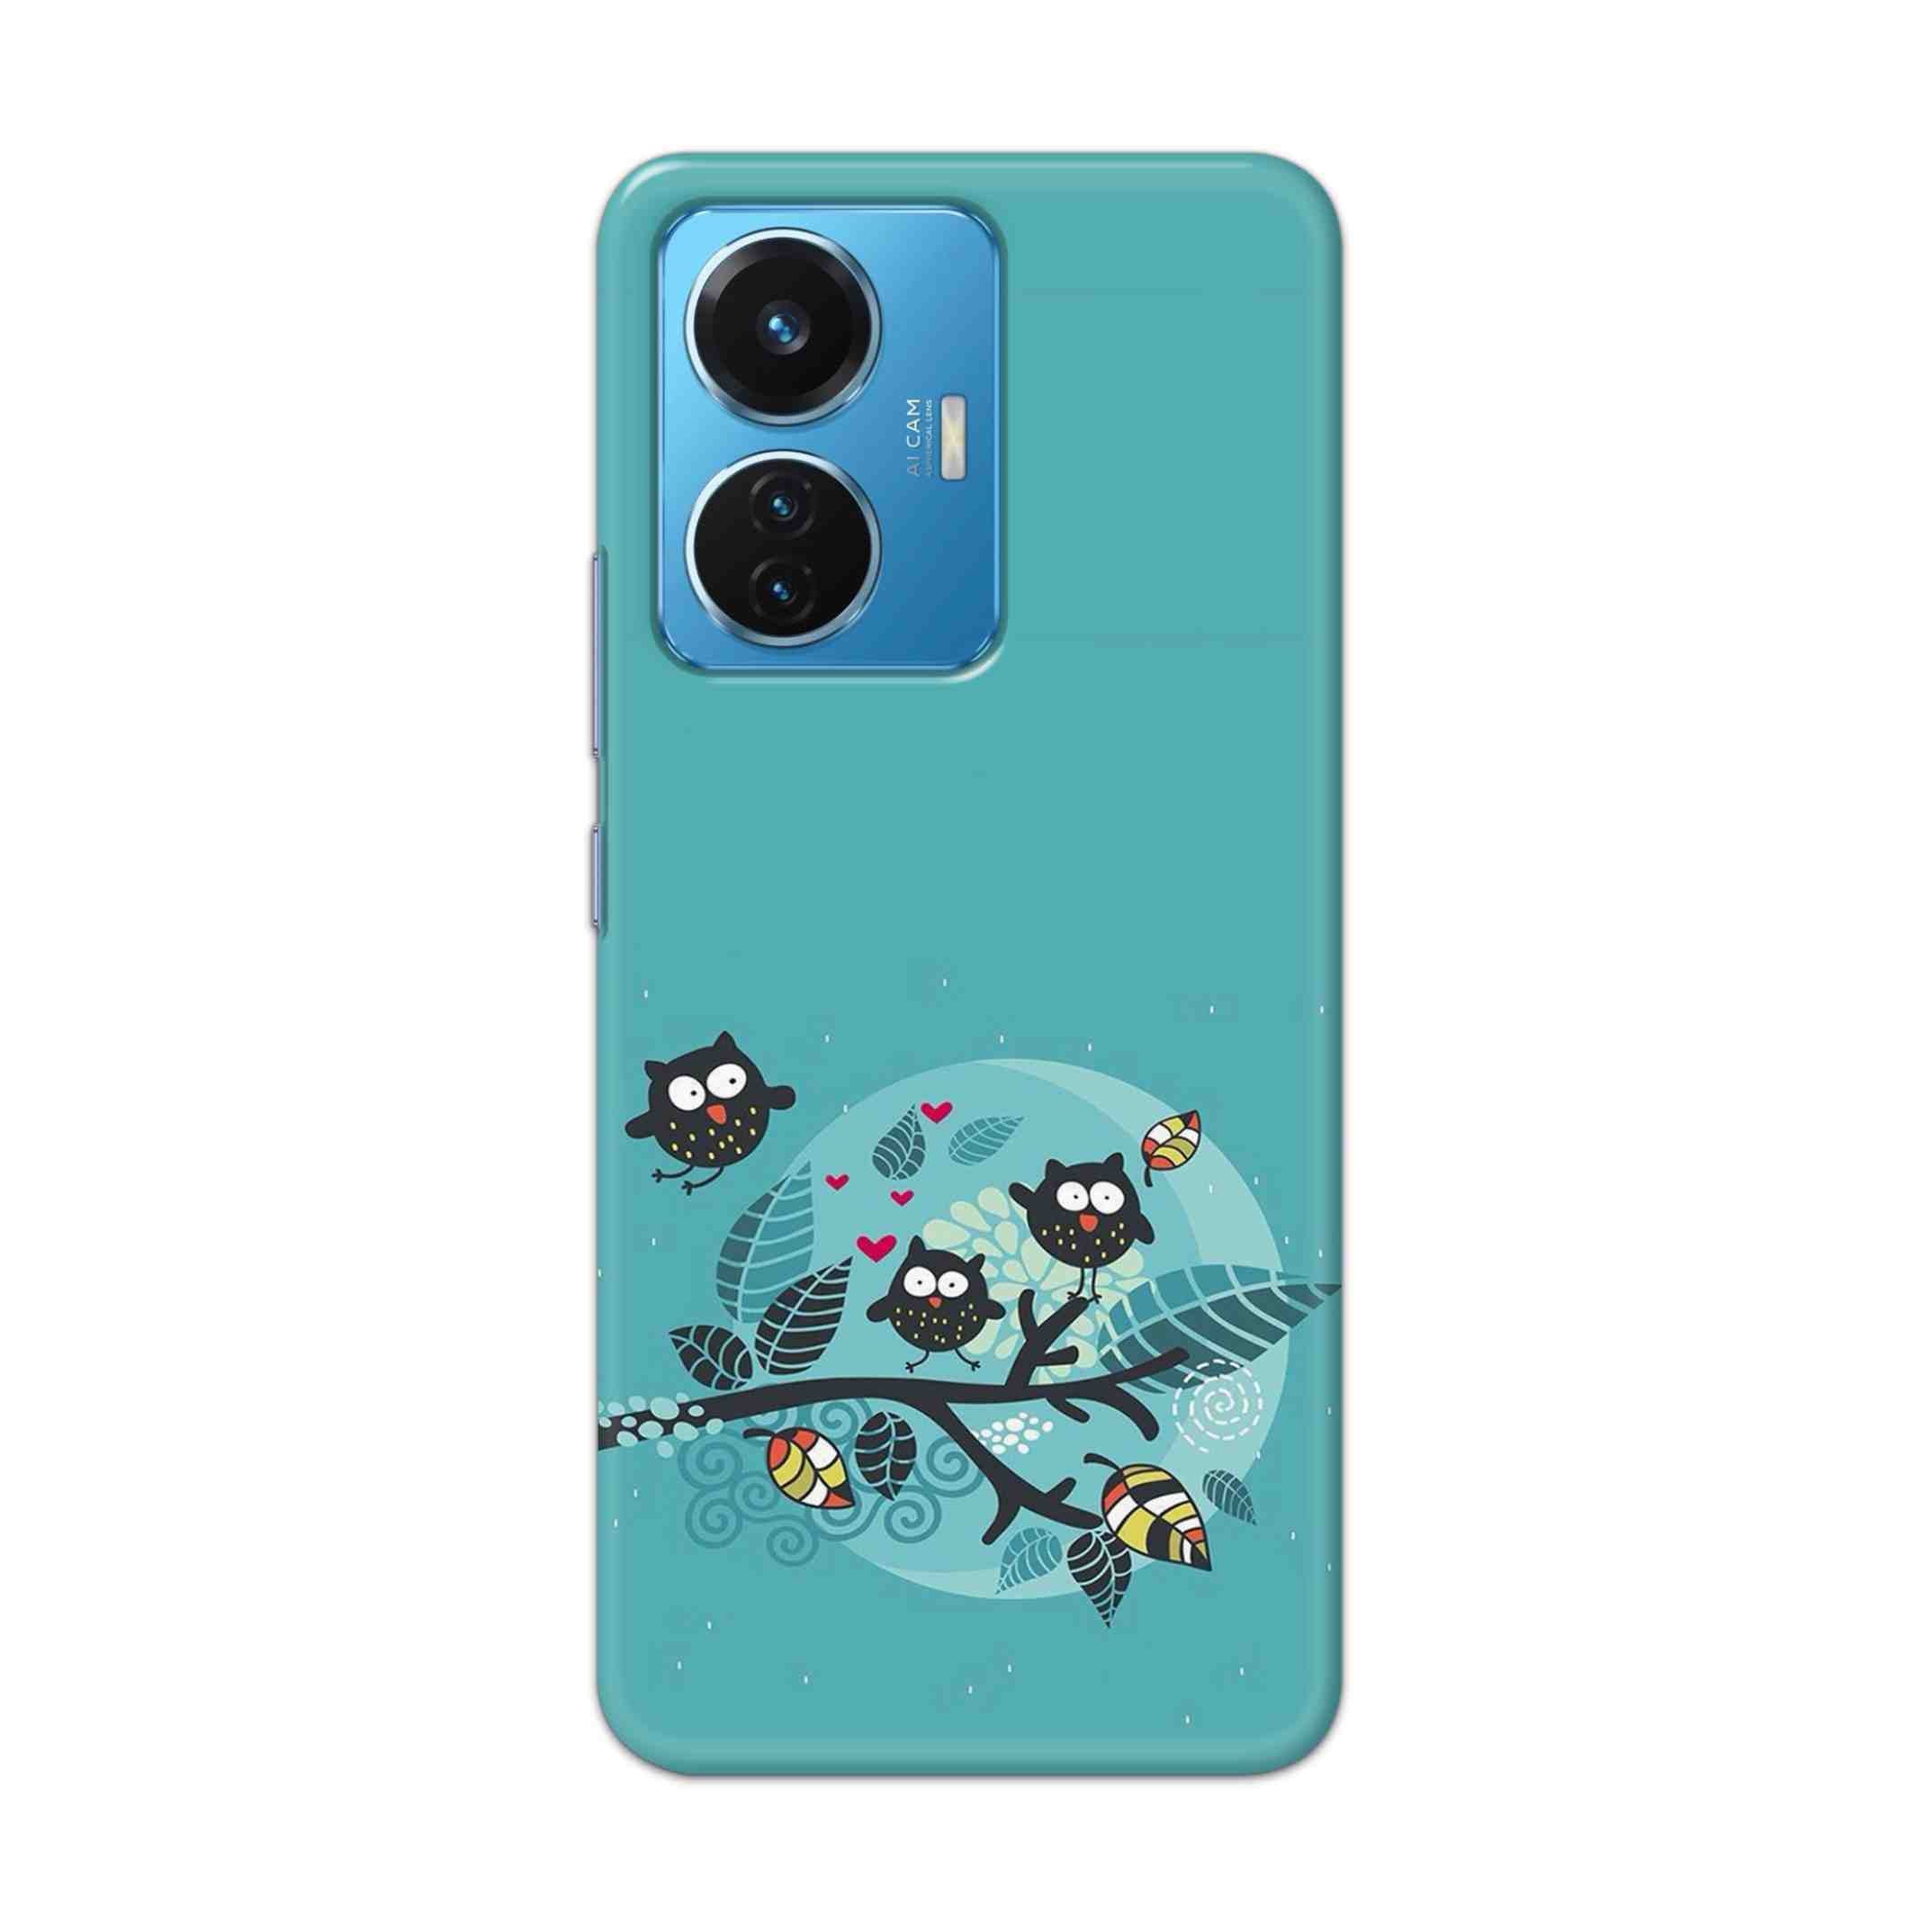 Buy Owl Hard Back Mobile Phone Case Cover For Vivo T1 44W Online